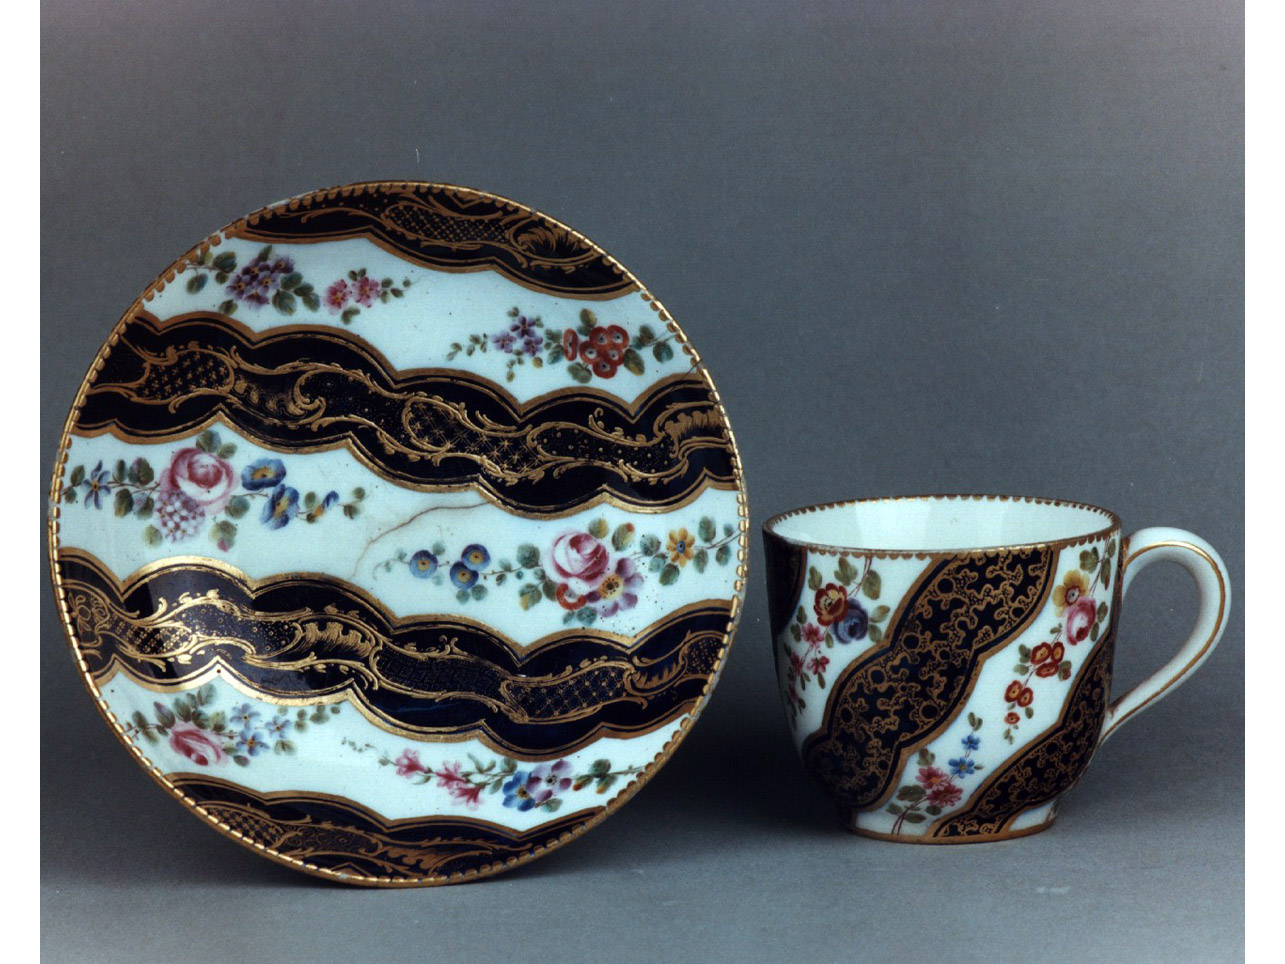 motivi decorativi floreali (tazza) - manifattura di Sèvres (sec. XVIII)